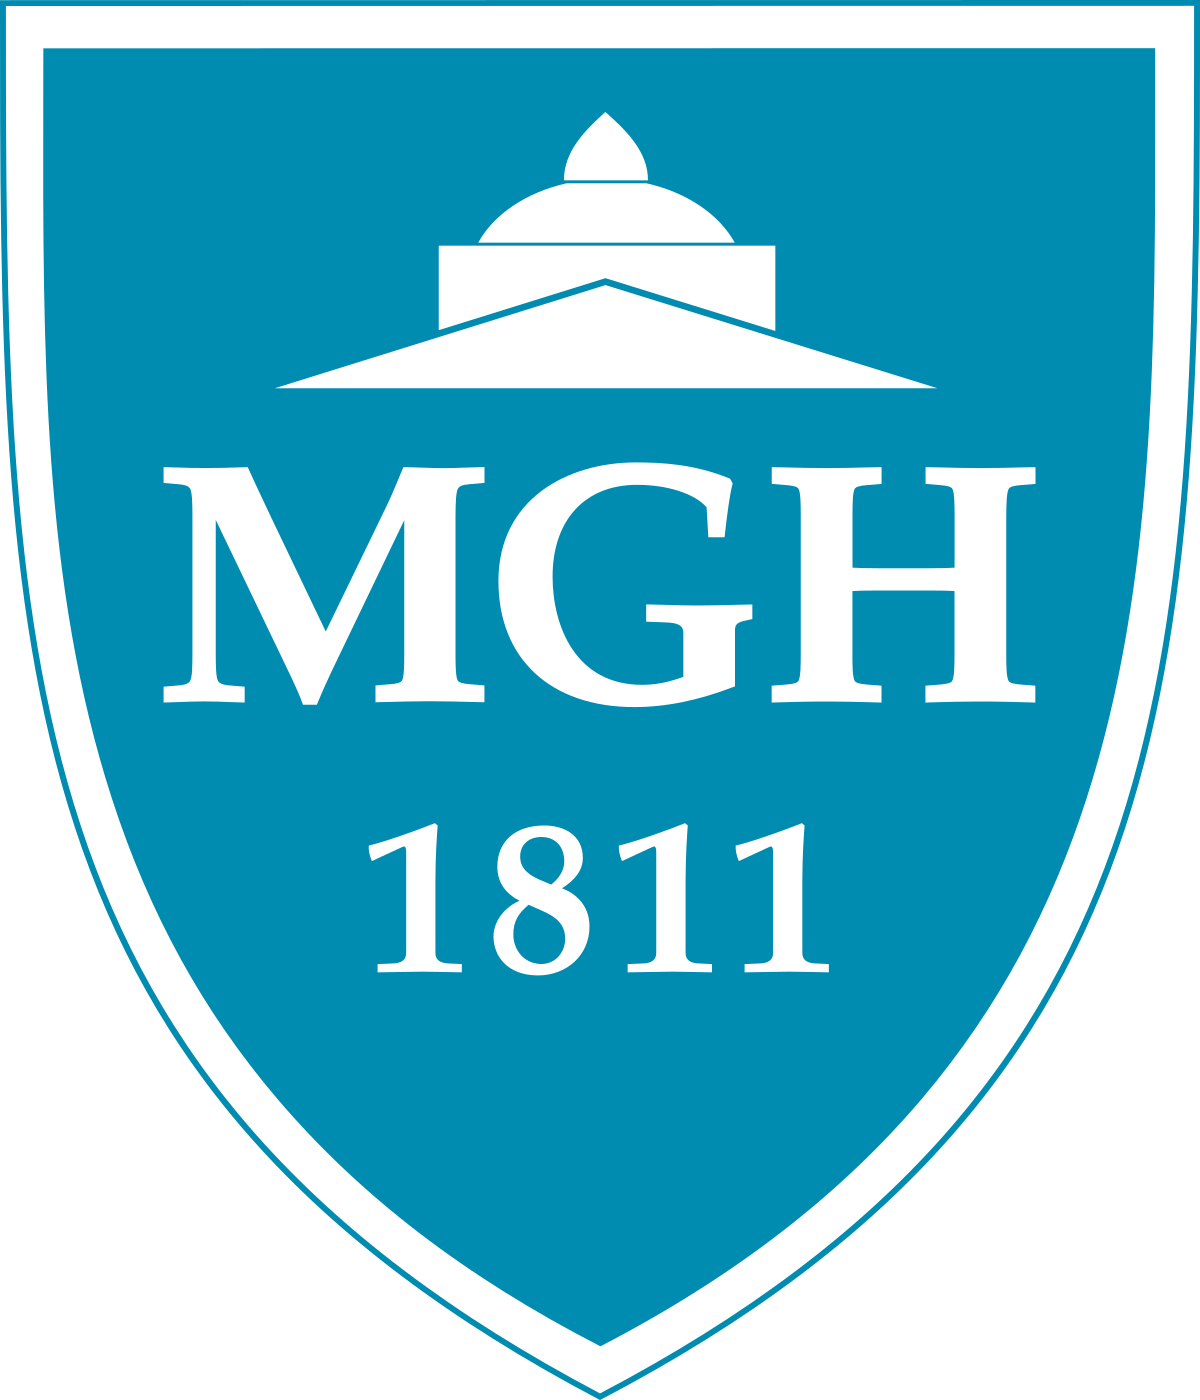 Massachusetts General Hospital logo.svg - Wikipedia